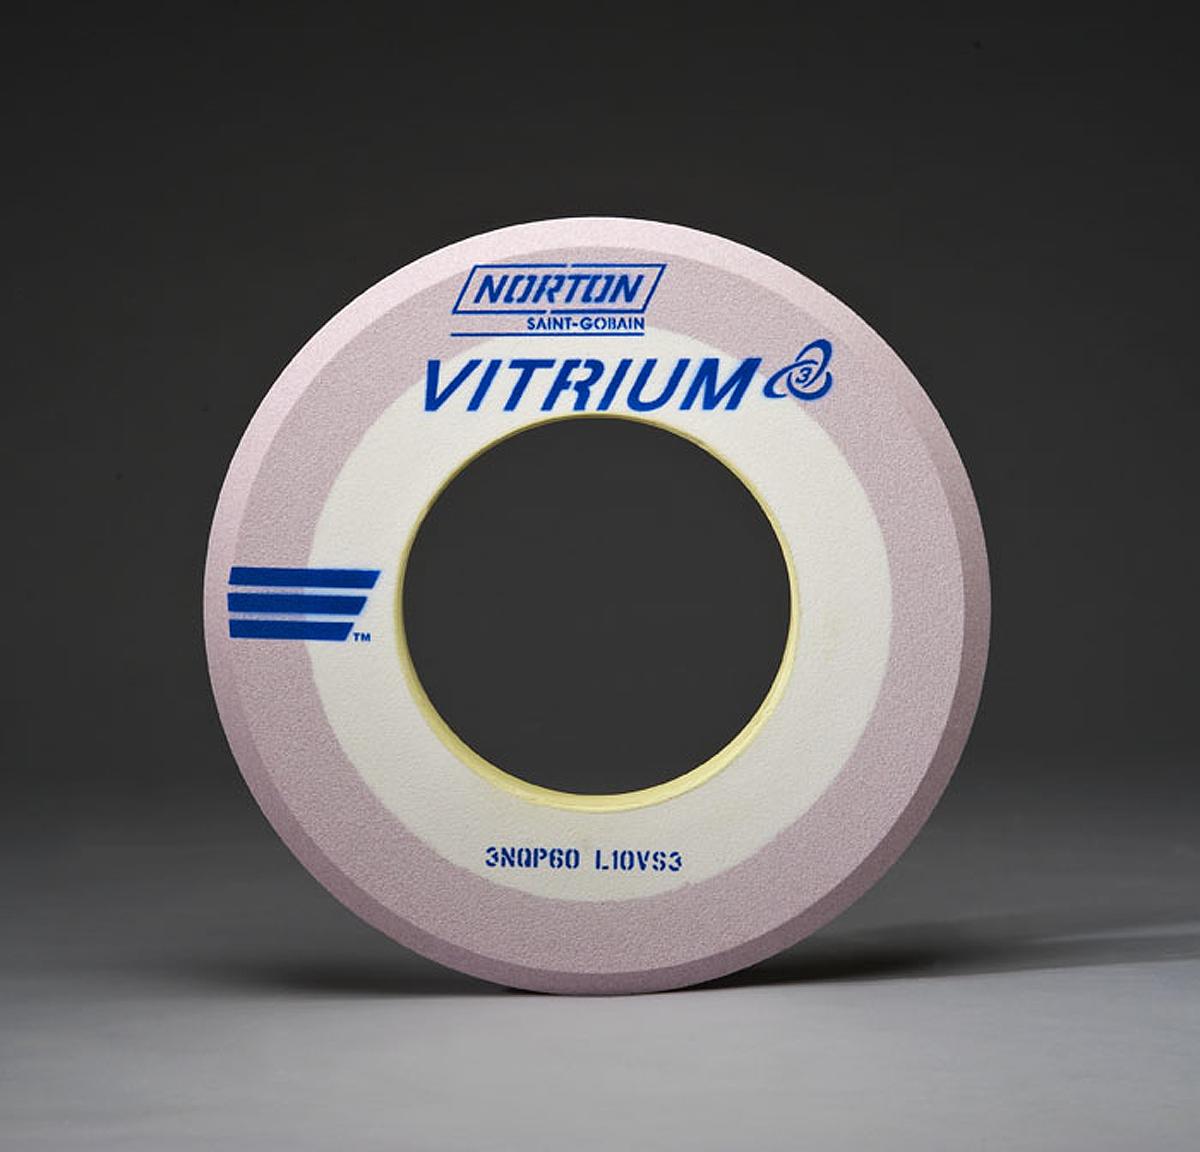 Norton Abrasives release Vitrium3 grinding wheel